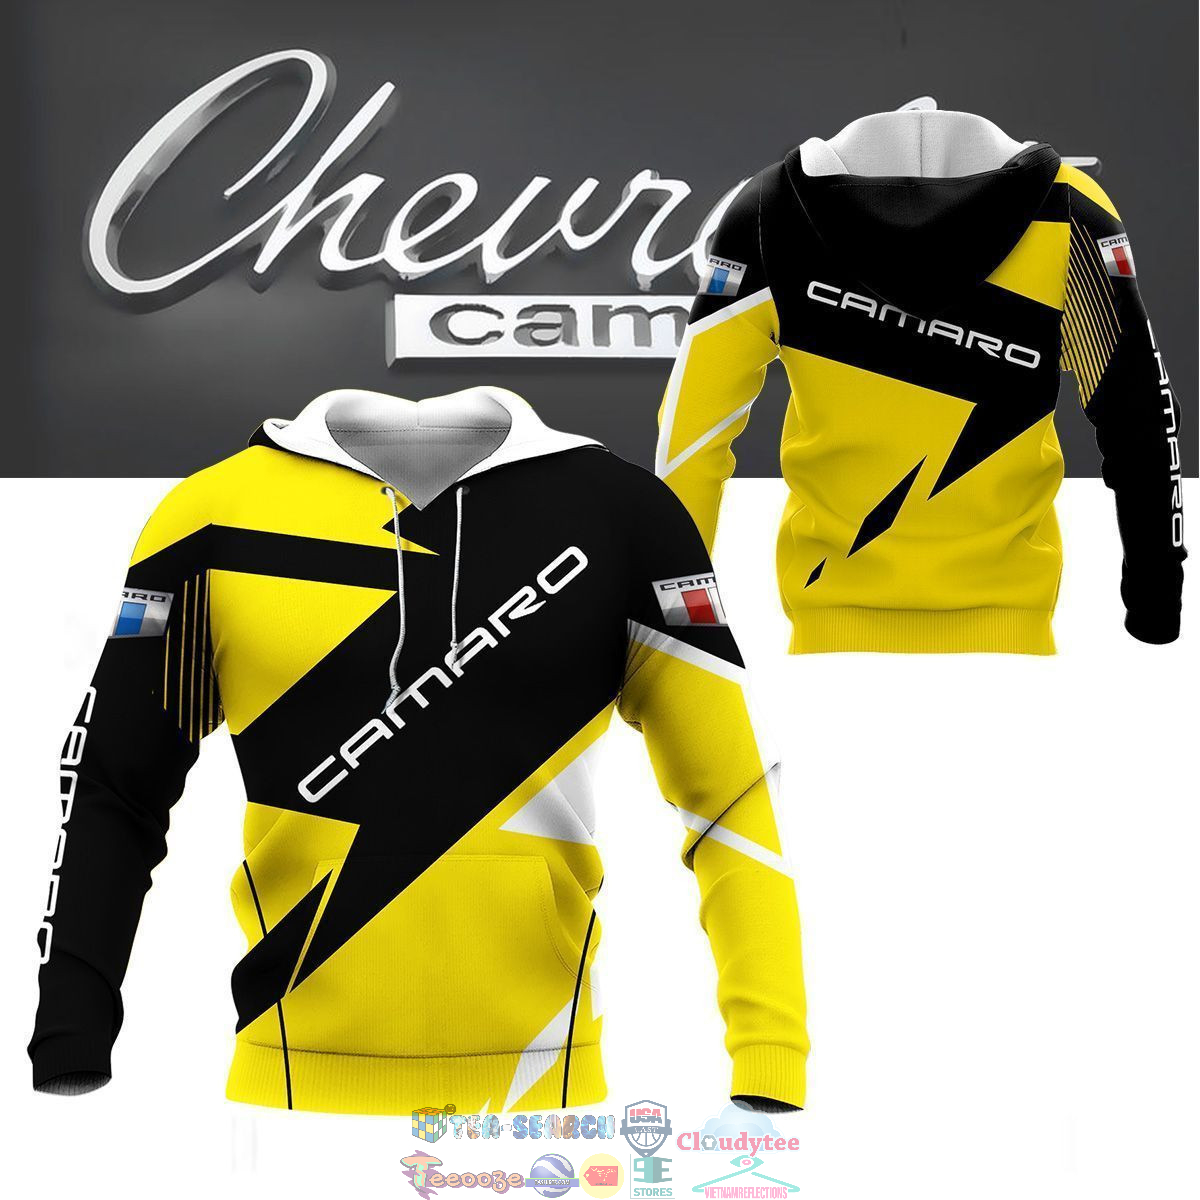 Chevrolet Camaro ver 15 3D hoodie and t-shirt – Saleoff